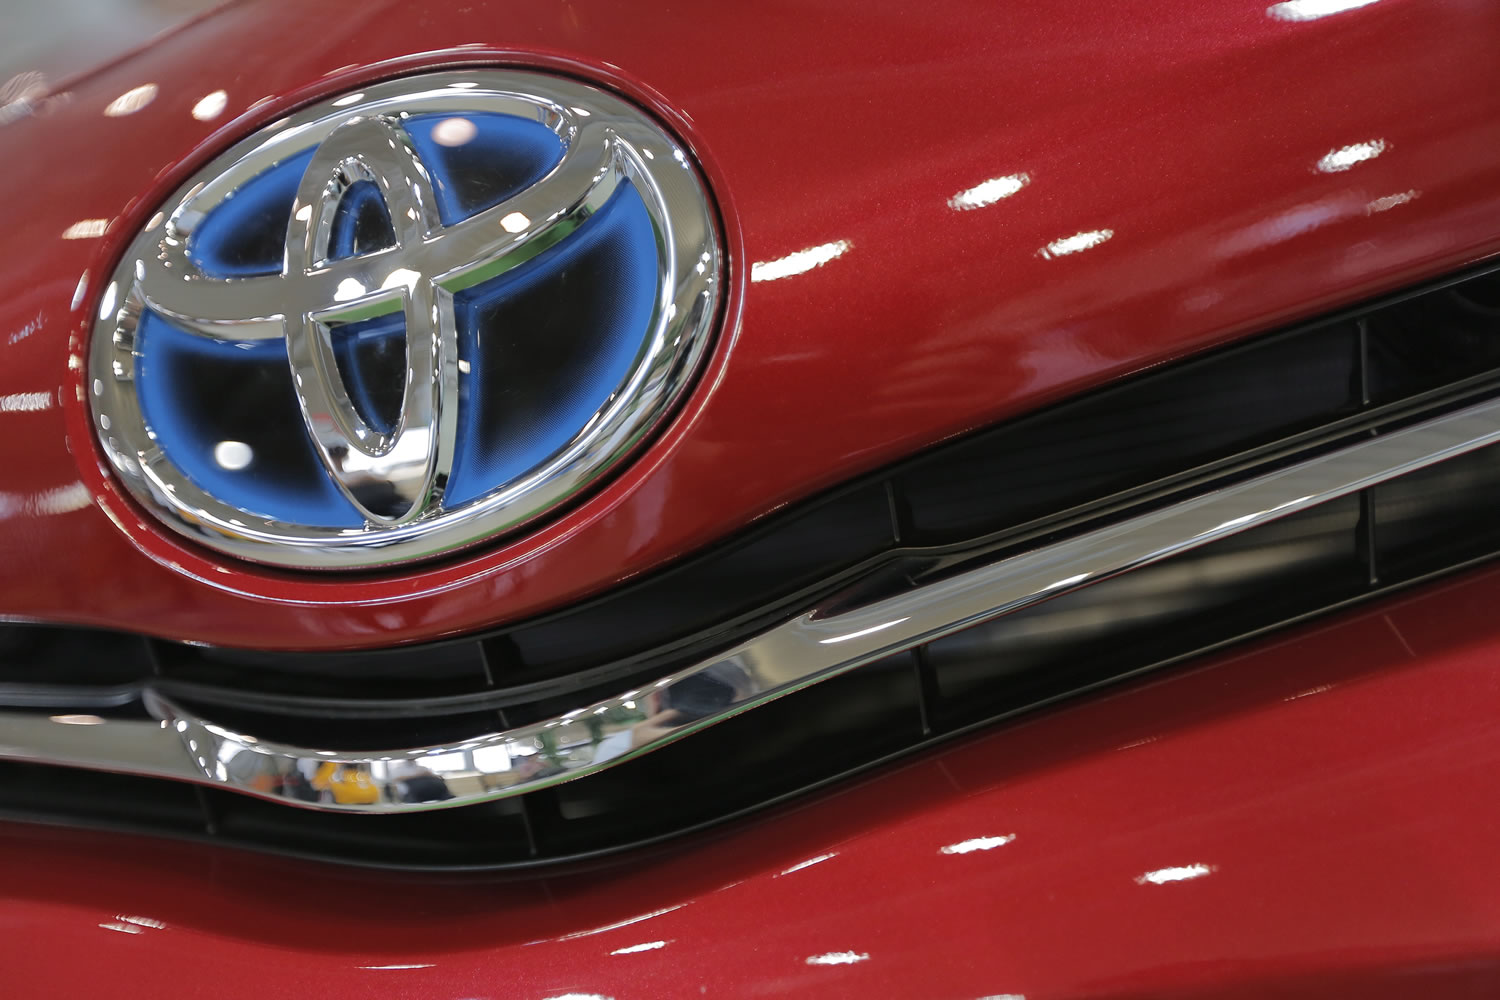 Toyota recalls 1.8M vehicles in the U.S. - The Columbian